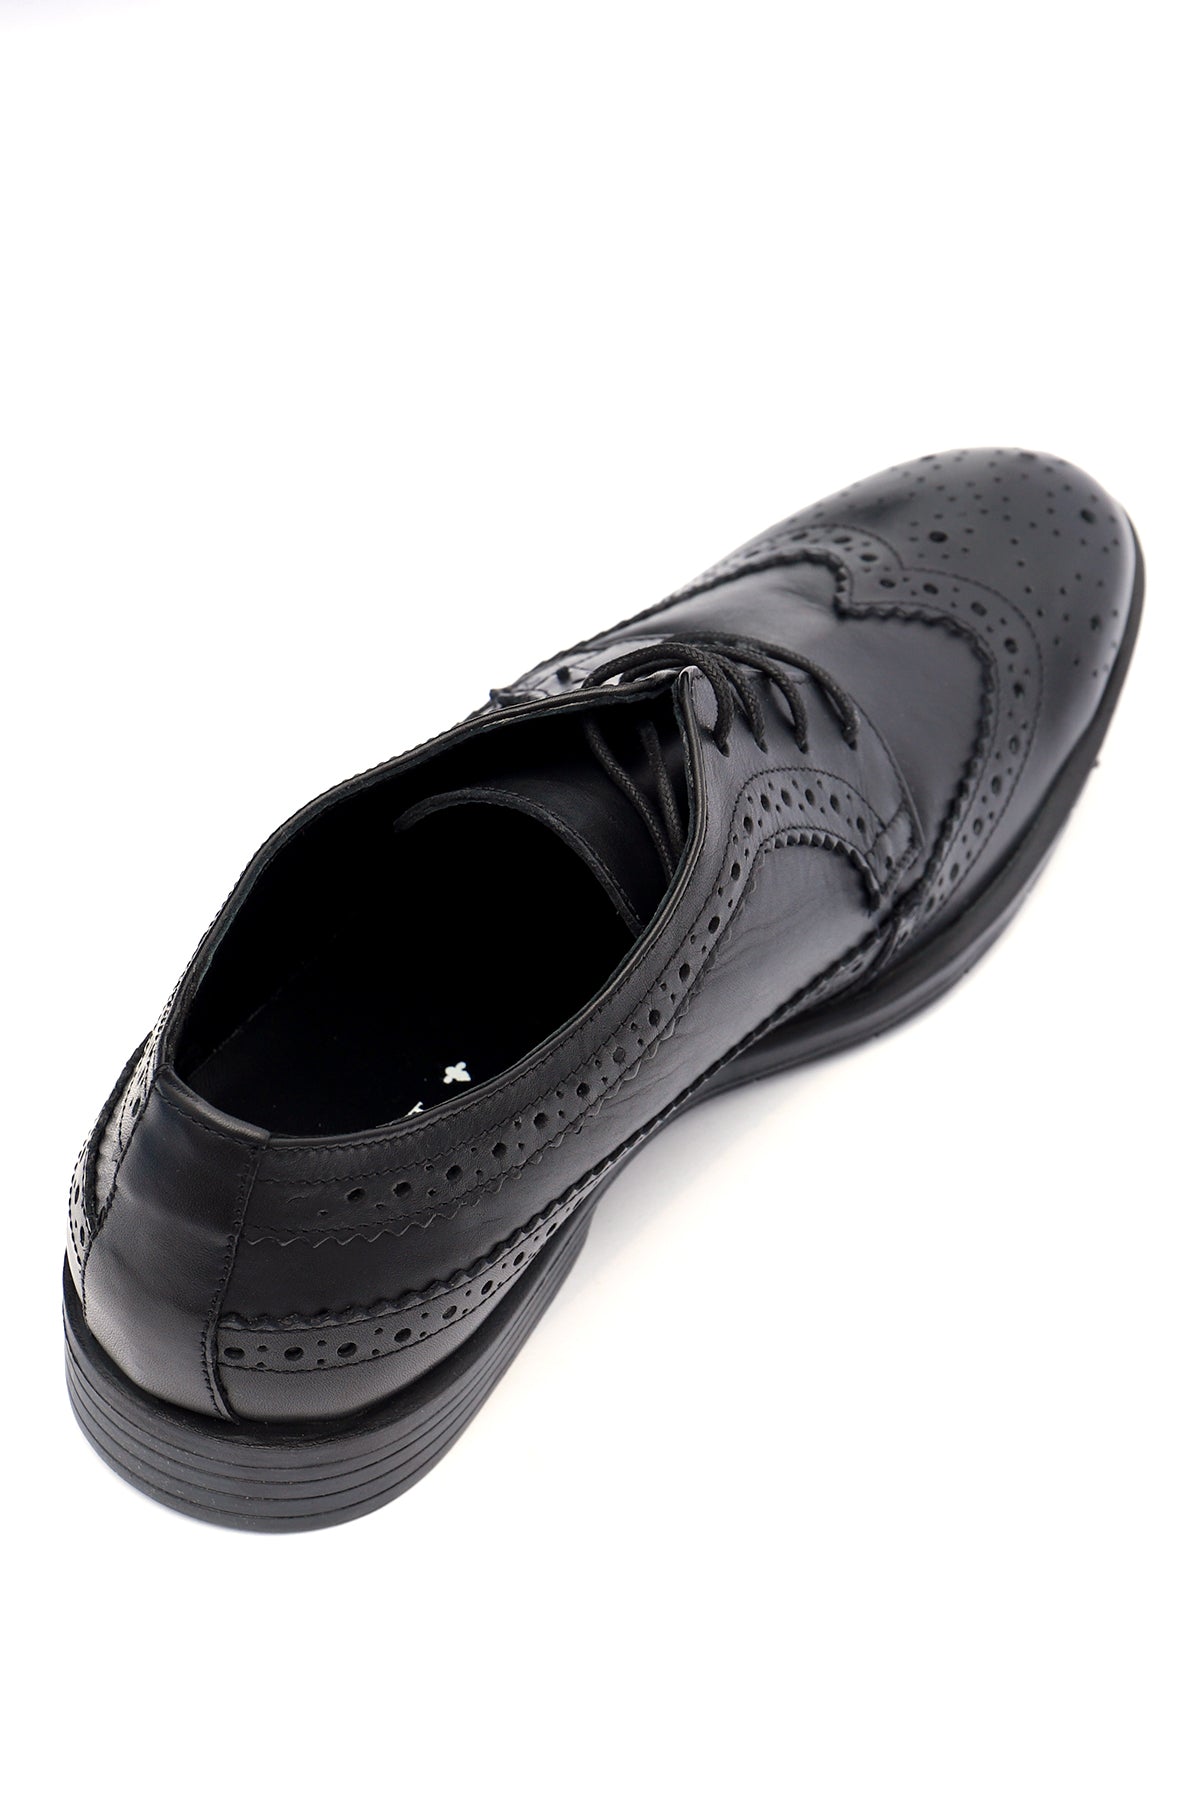 King Street Men's Casual Shoe